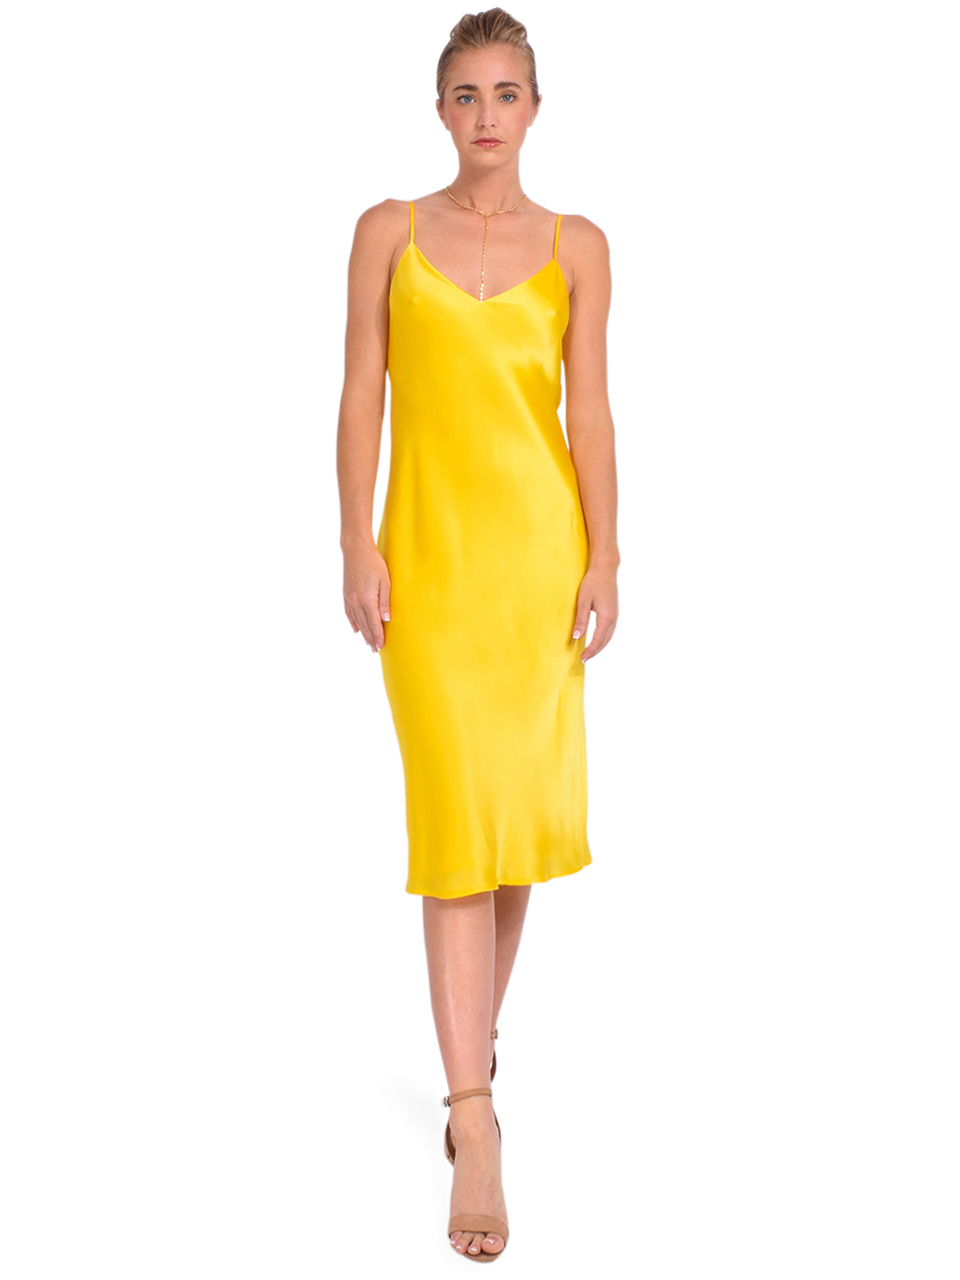 L'Agence Jodie V-Neck Slip Dress in Light Maize Front View 